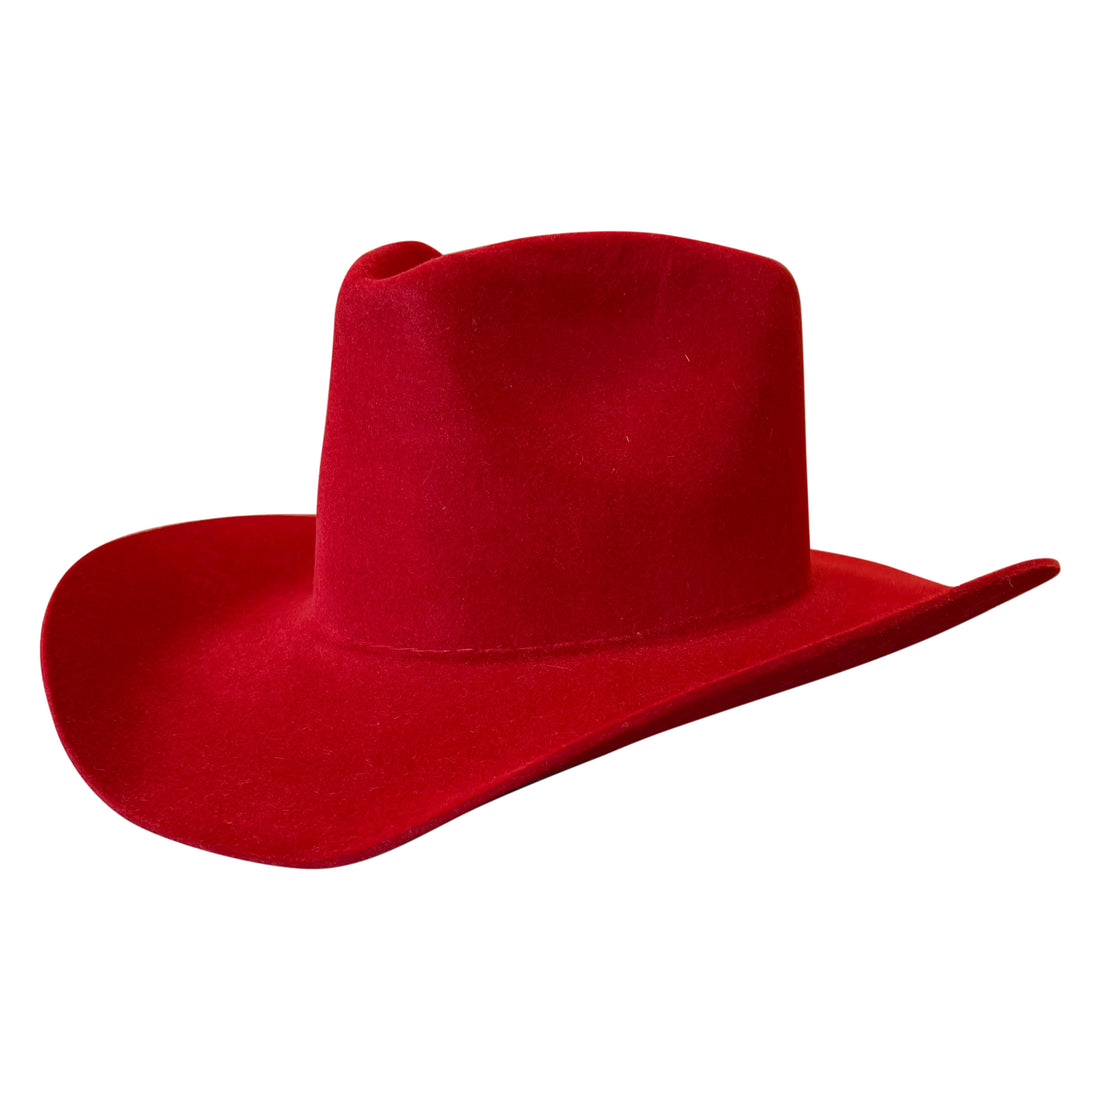 Western Felt Hat - Colors